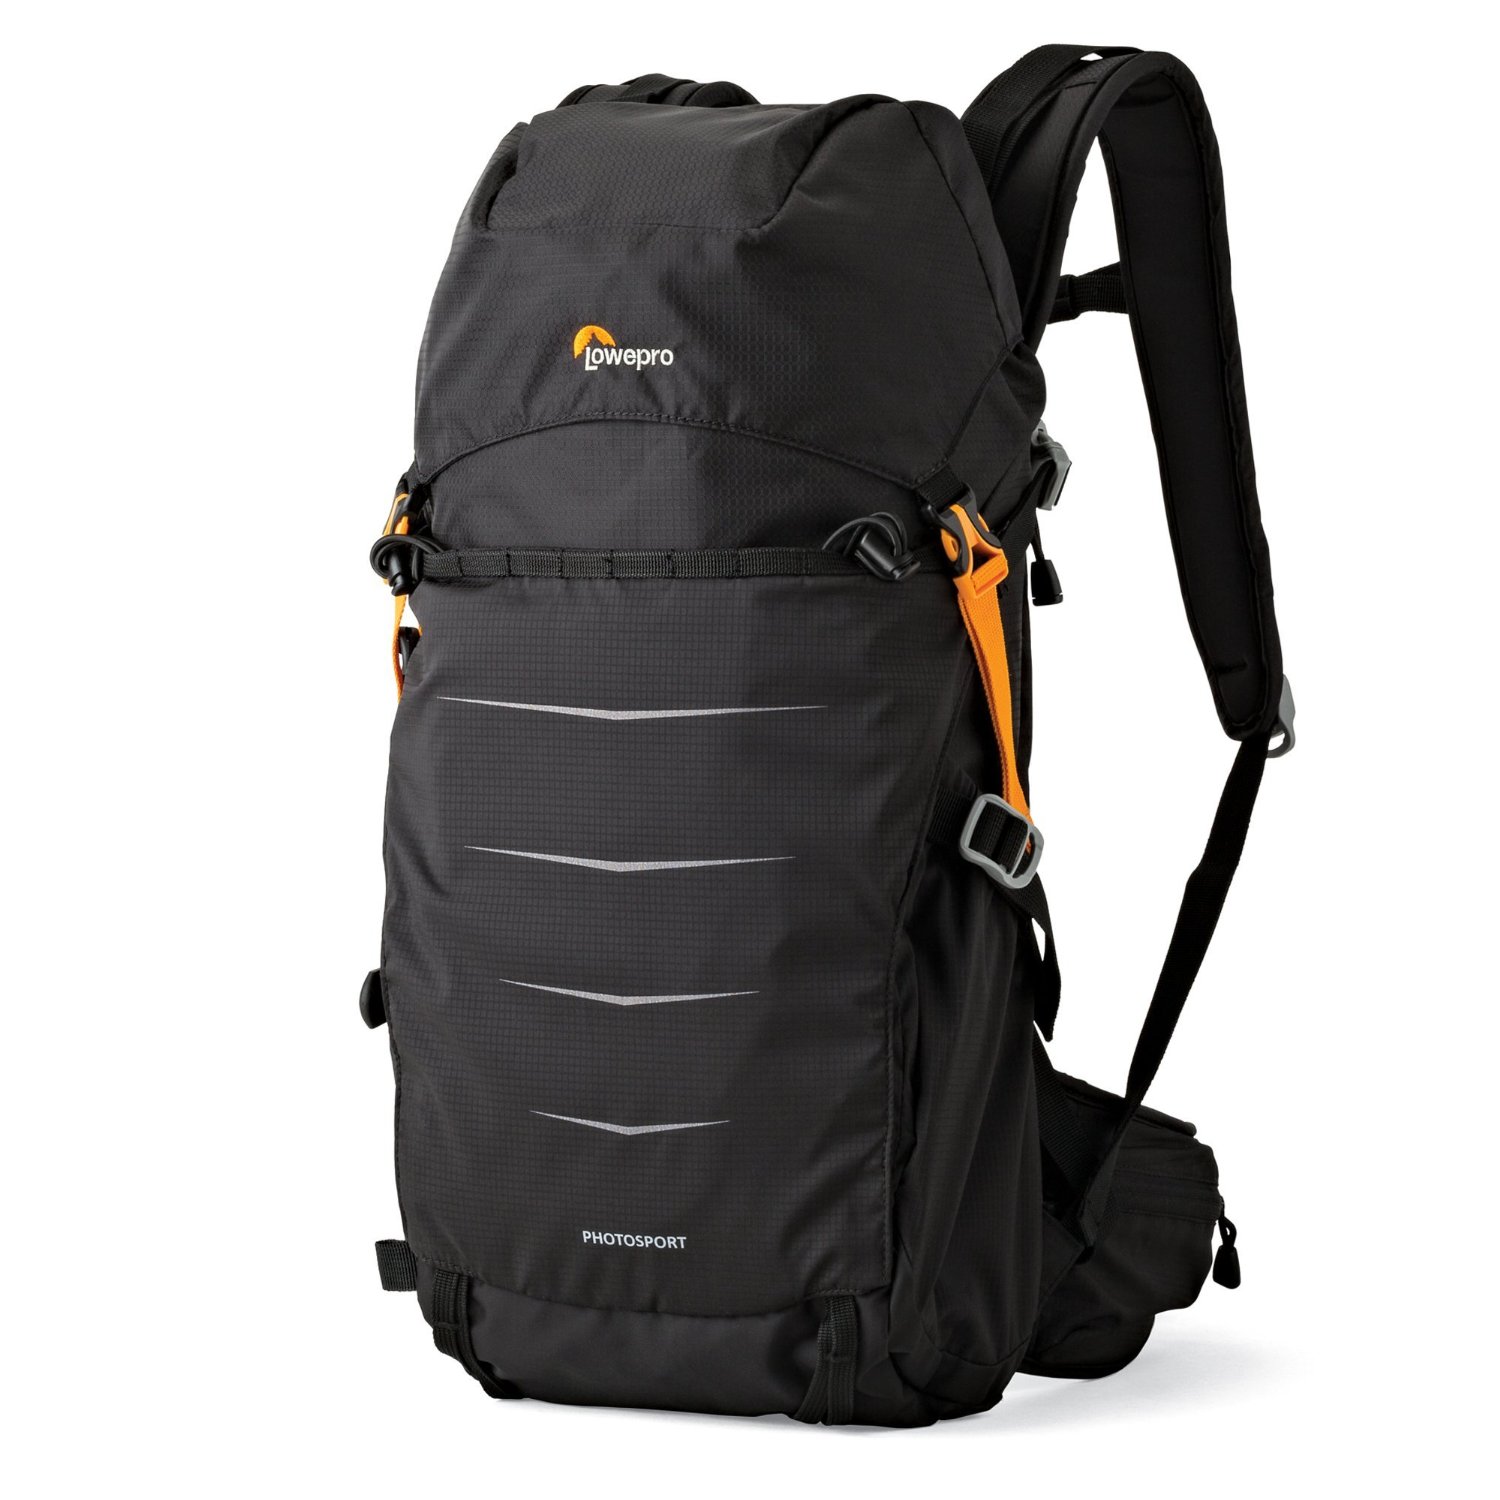 Lowepro Photo Sport Backpack Camera Backpack Hiking Camera Backpack Camera Backpack Reviews ?quality=65&strip=all